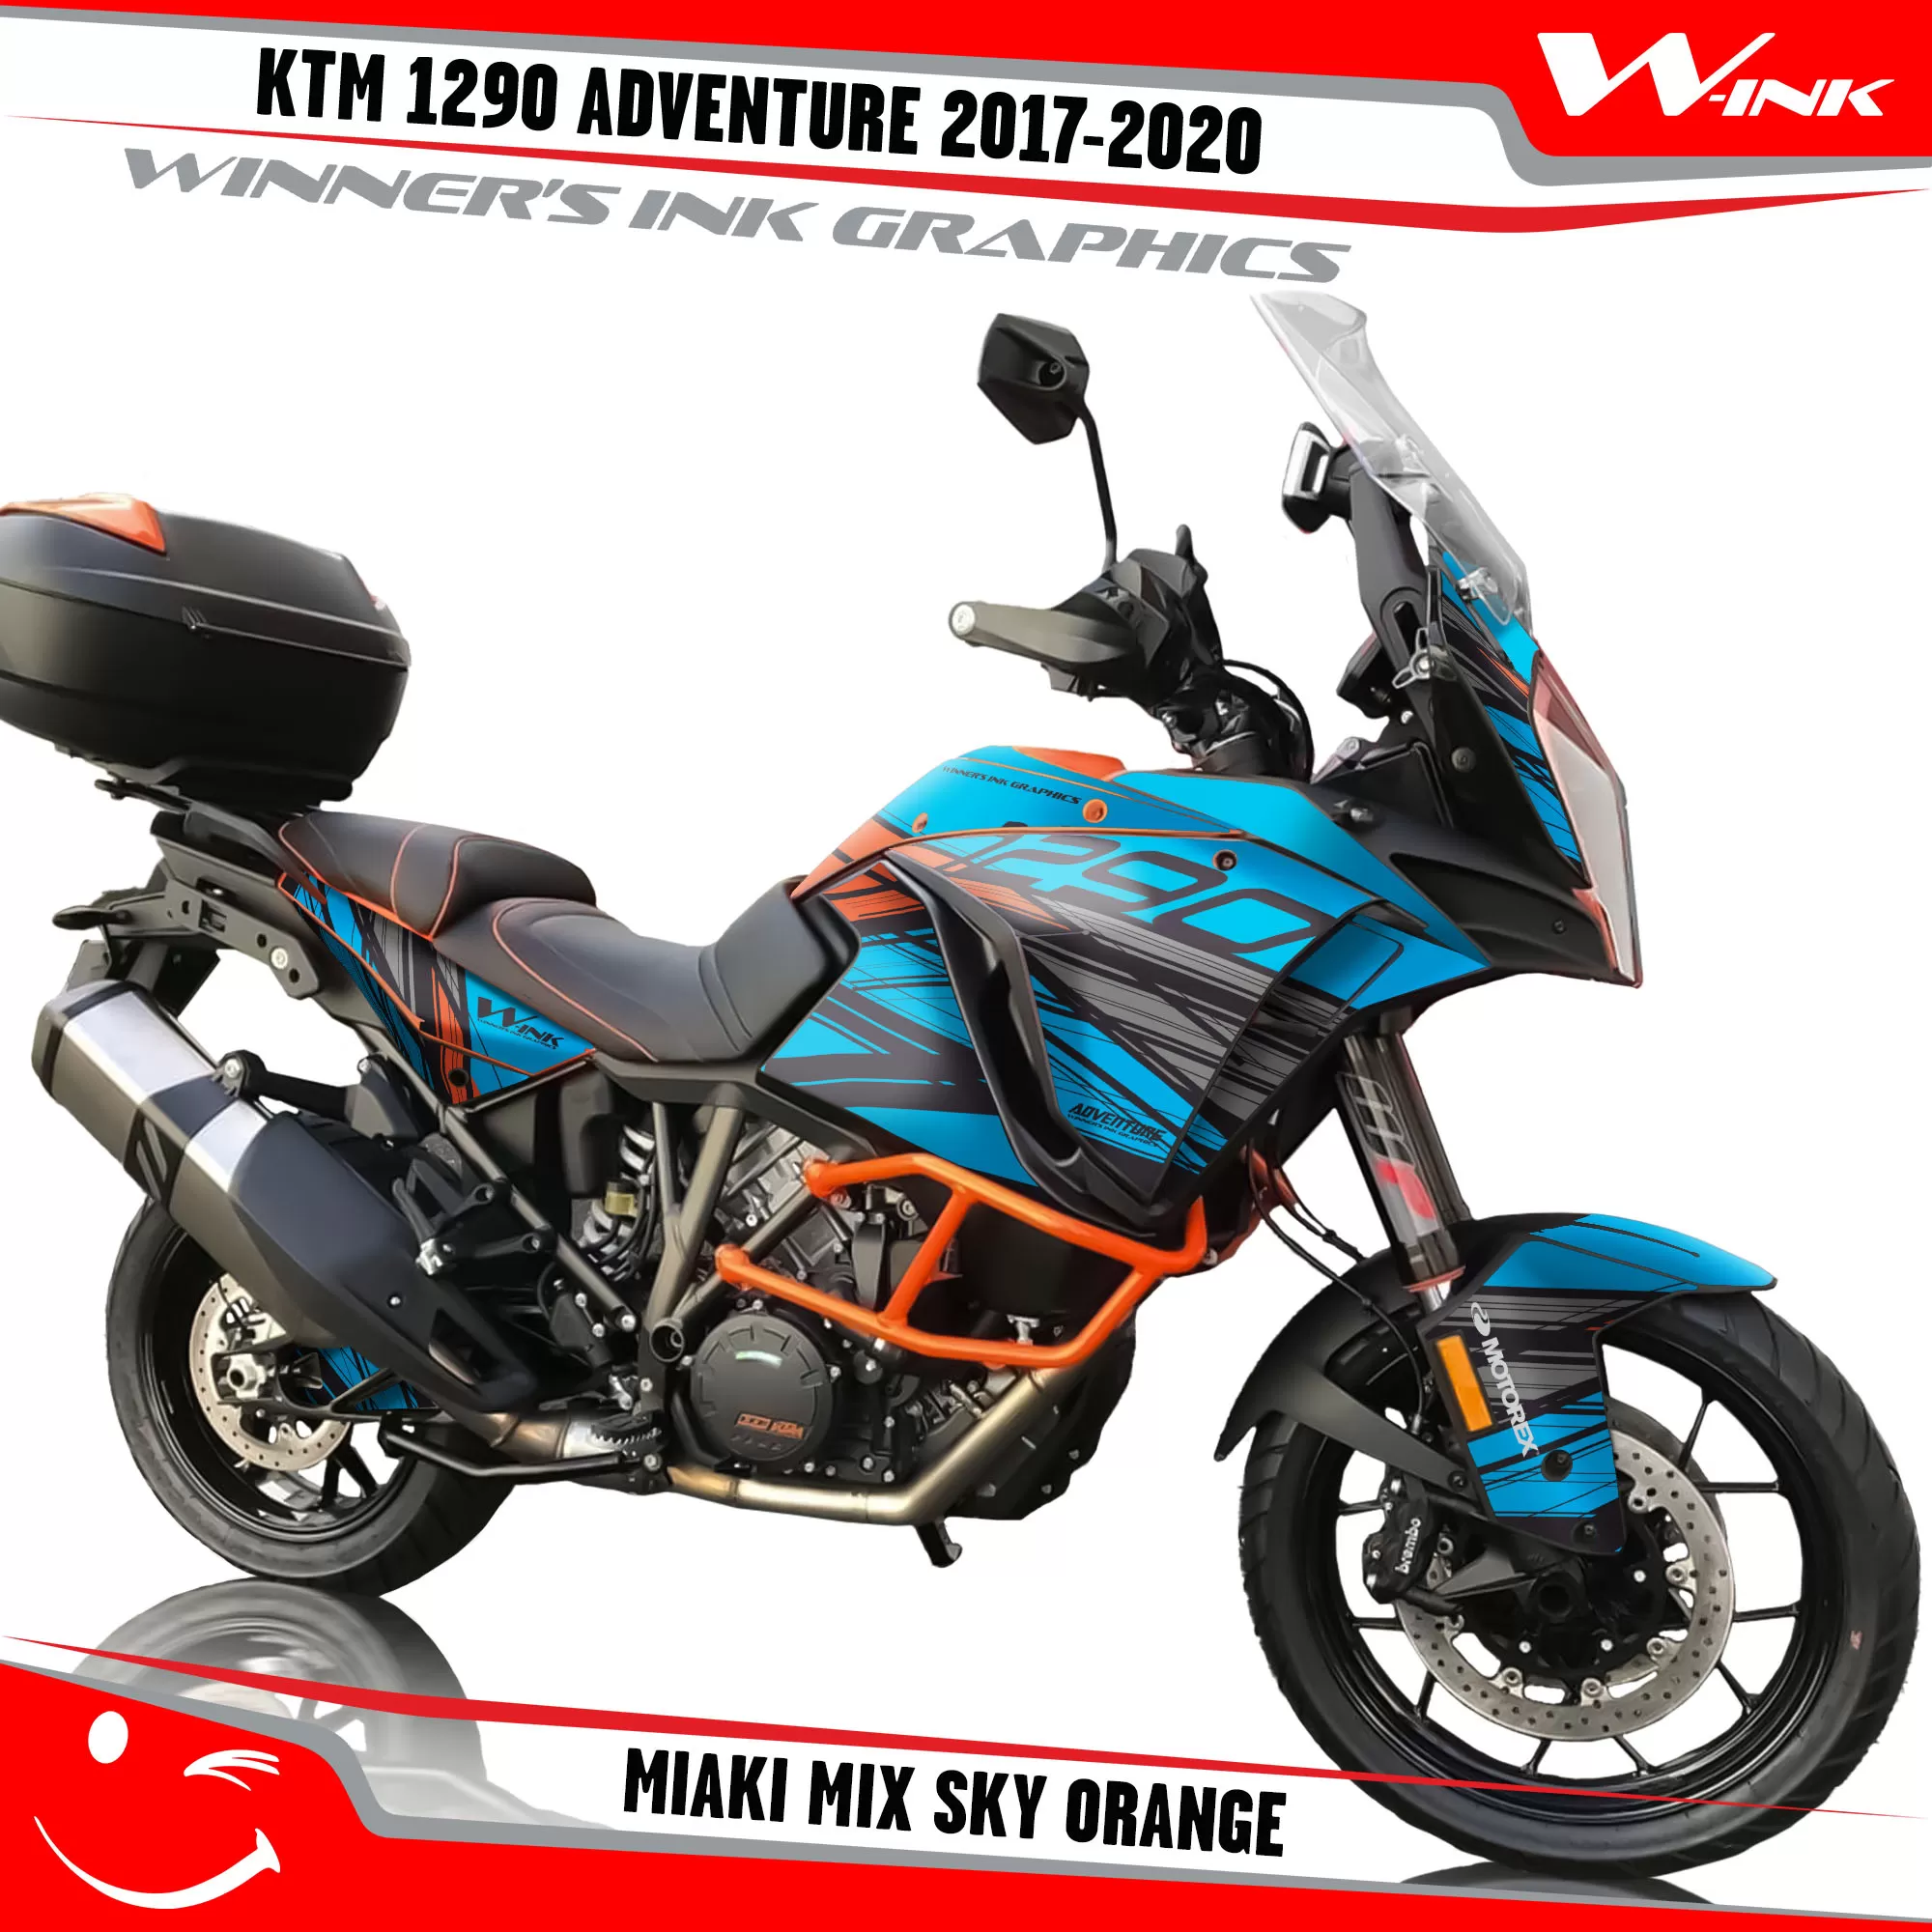 KTM-Adventure-1290-2017-2018-2019-2020-graphics-kit-and-decals-Miaki-Mix-Sky-Orange